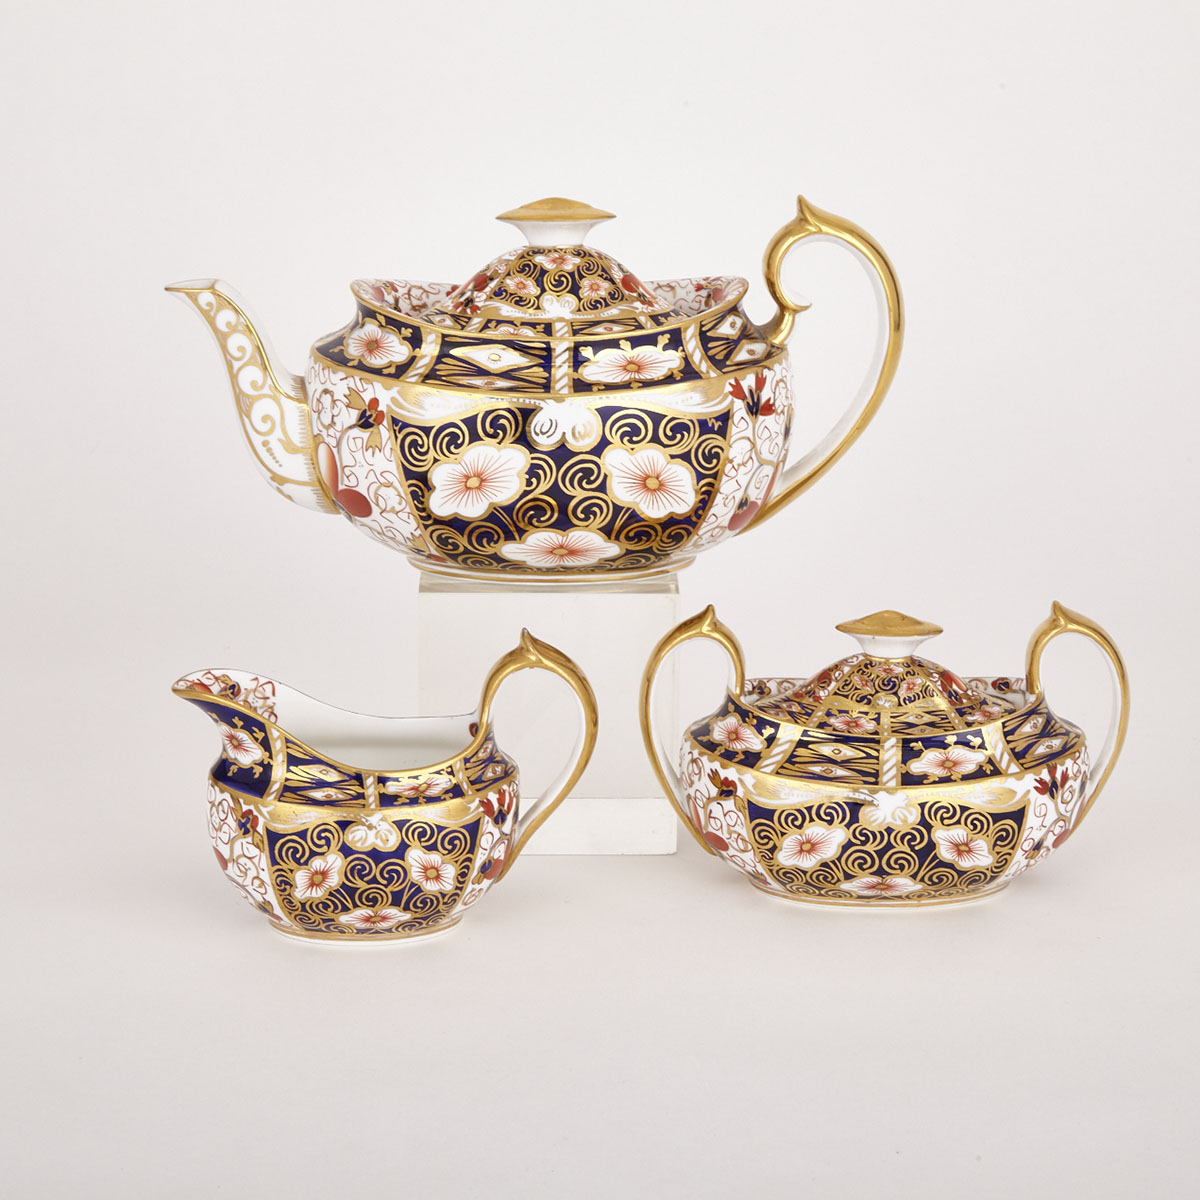 Royal Crown Derby ‘Imari’ (2451) Pattern Tea Service, 1909/17